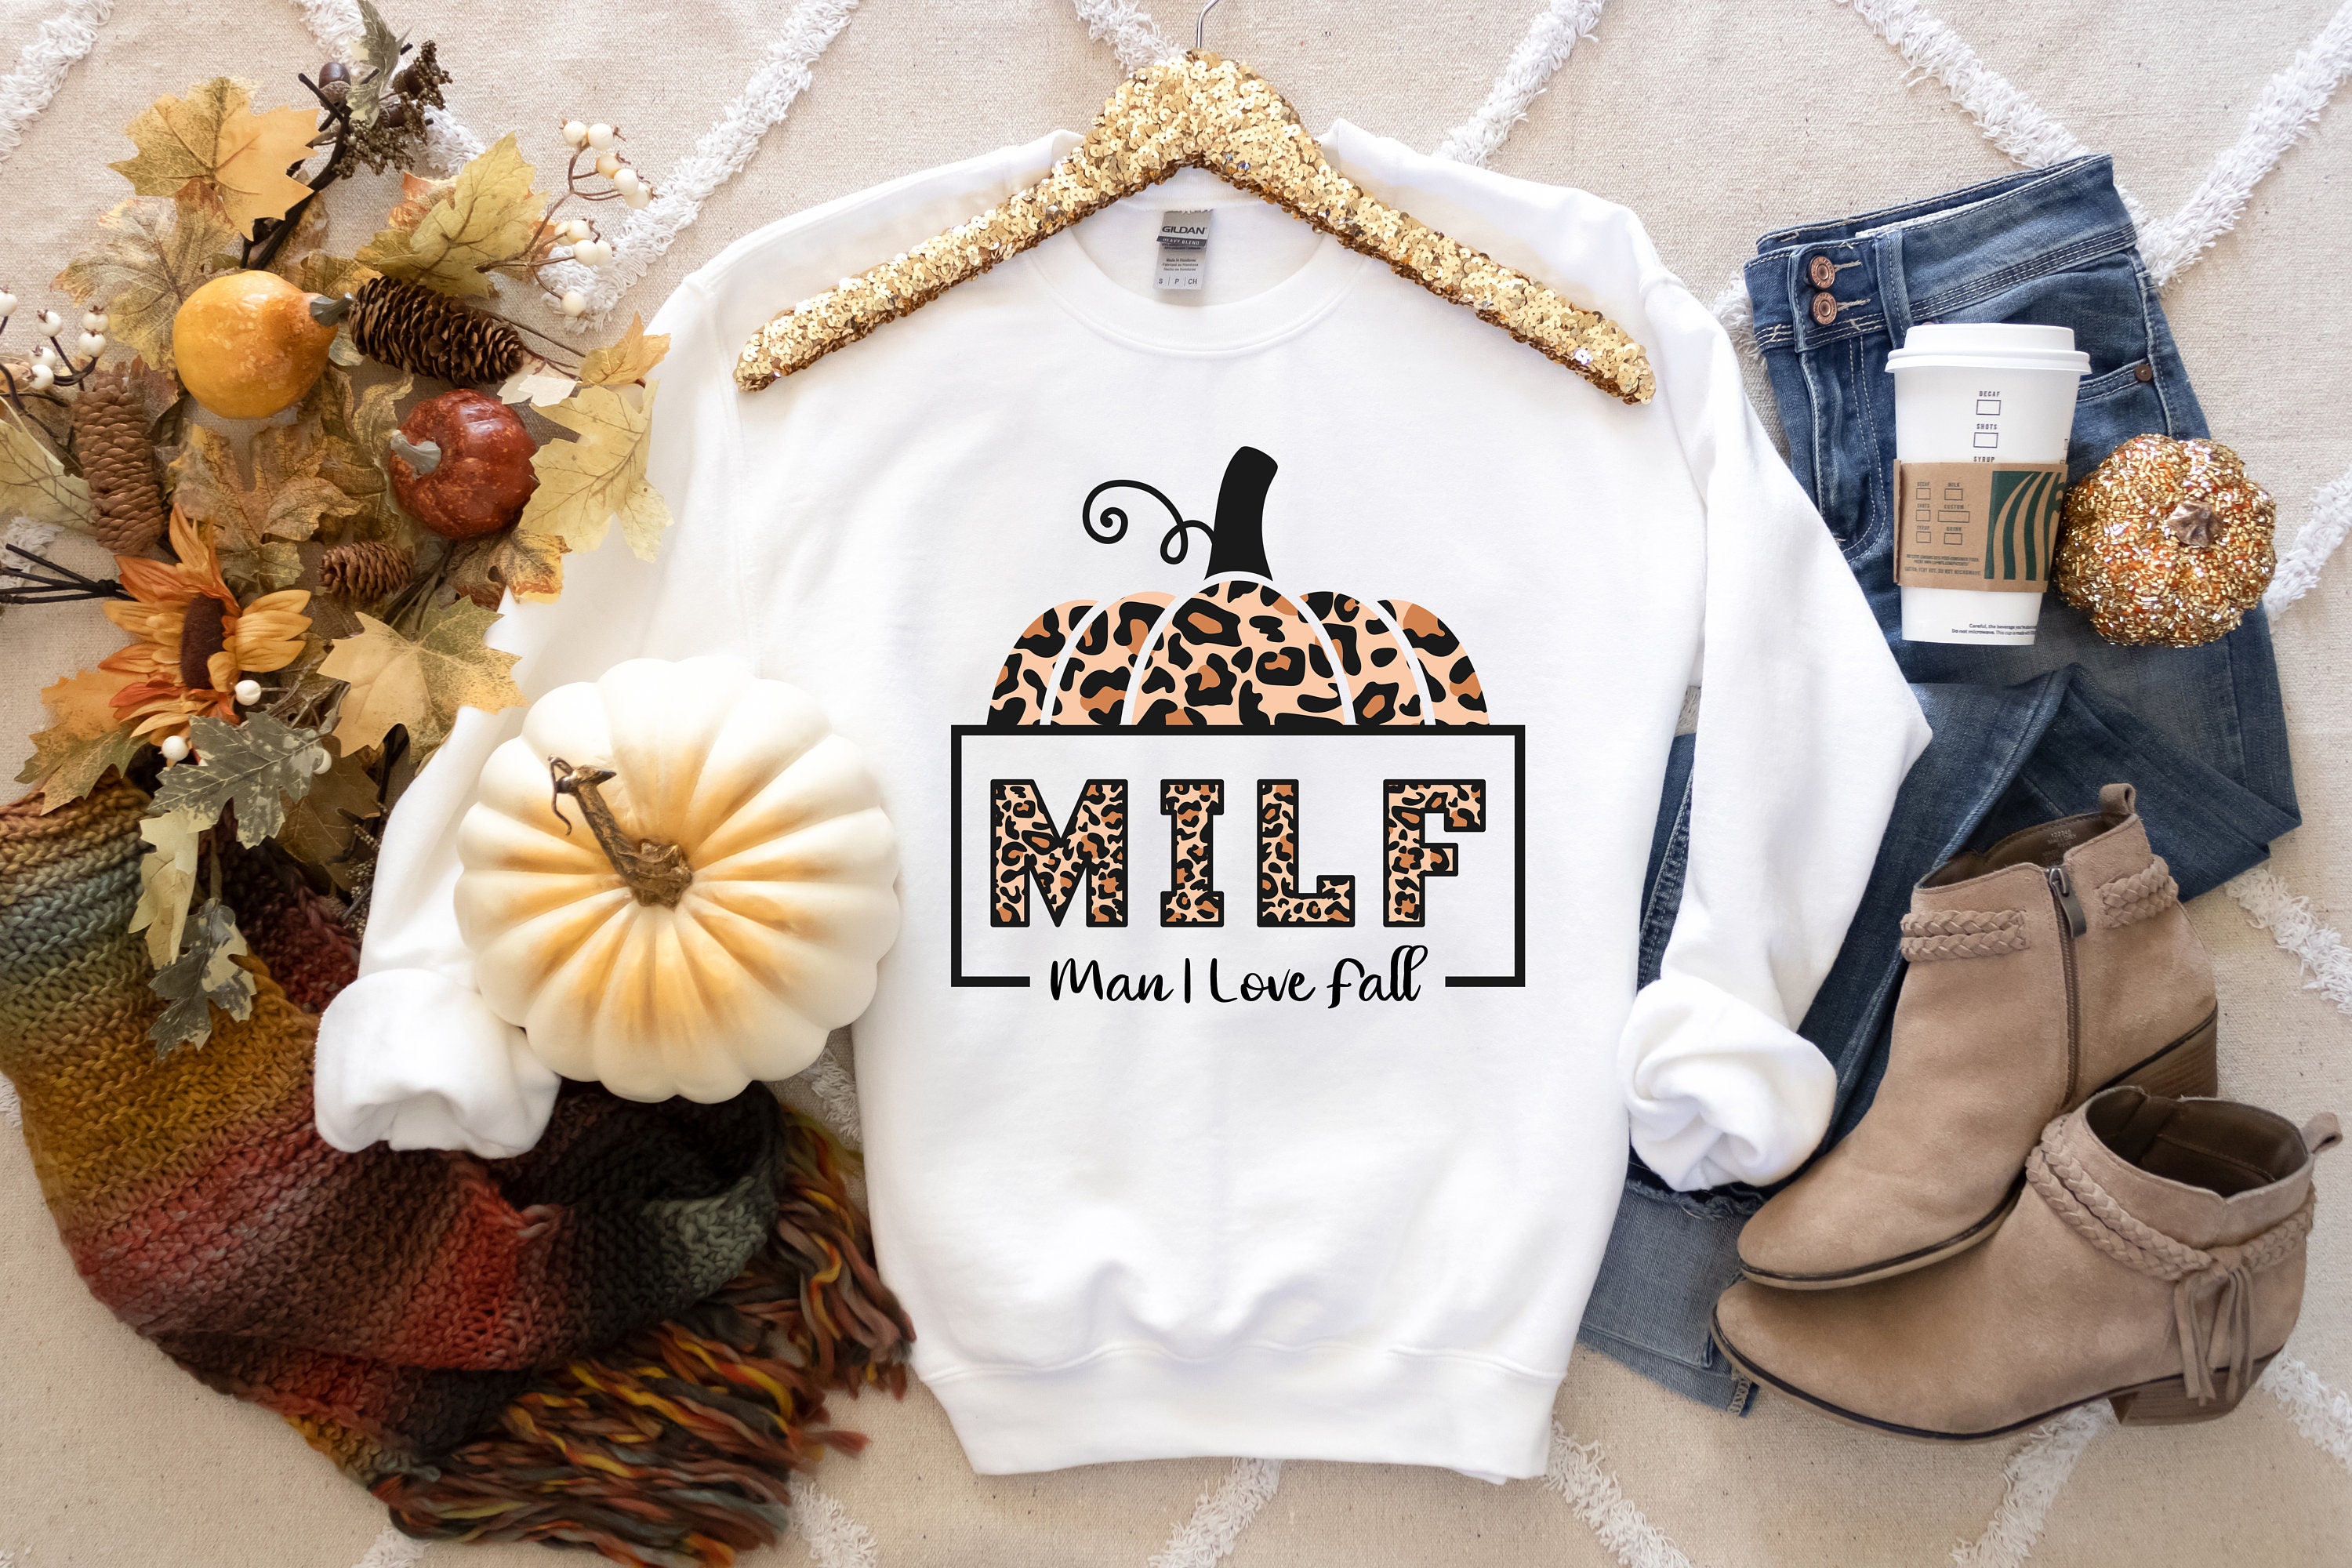 Discover Milf Man I Love Fall Shirt, Pumpkin Shirt, Fall Season Shirt, Milf Shirt, Leopard Pumpkin Shirt, Thanksgiving Shirt